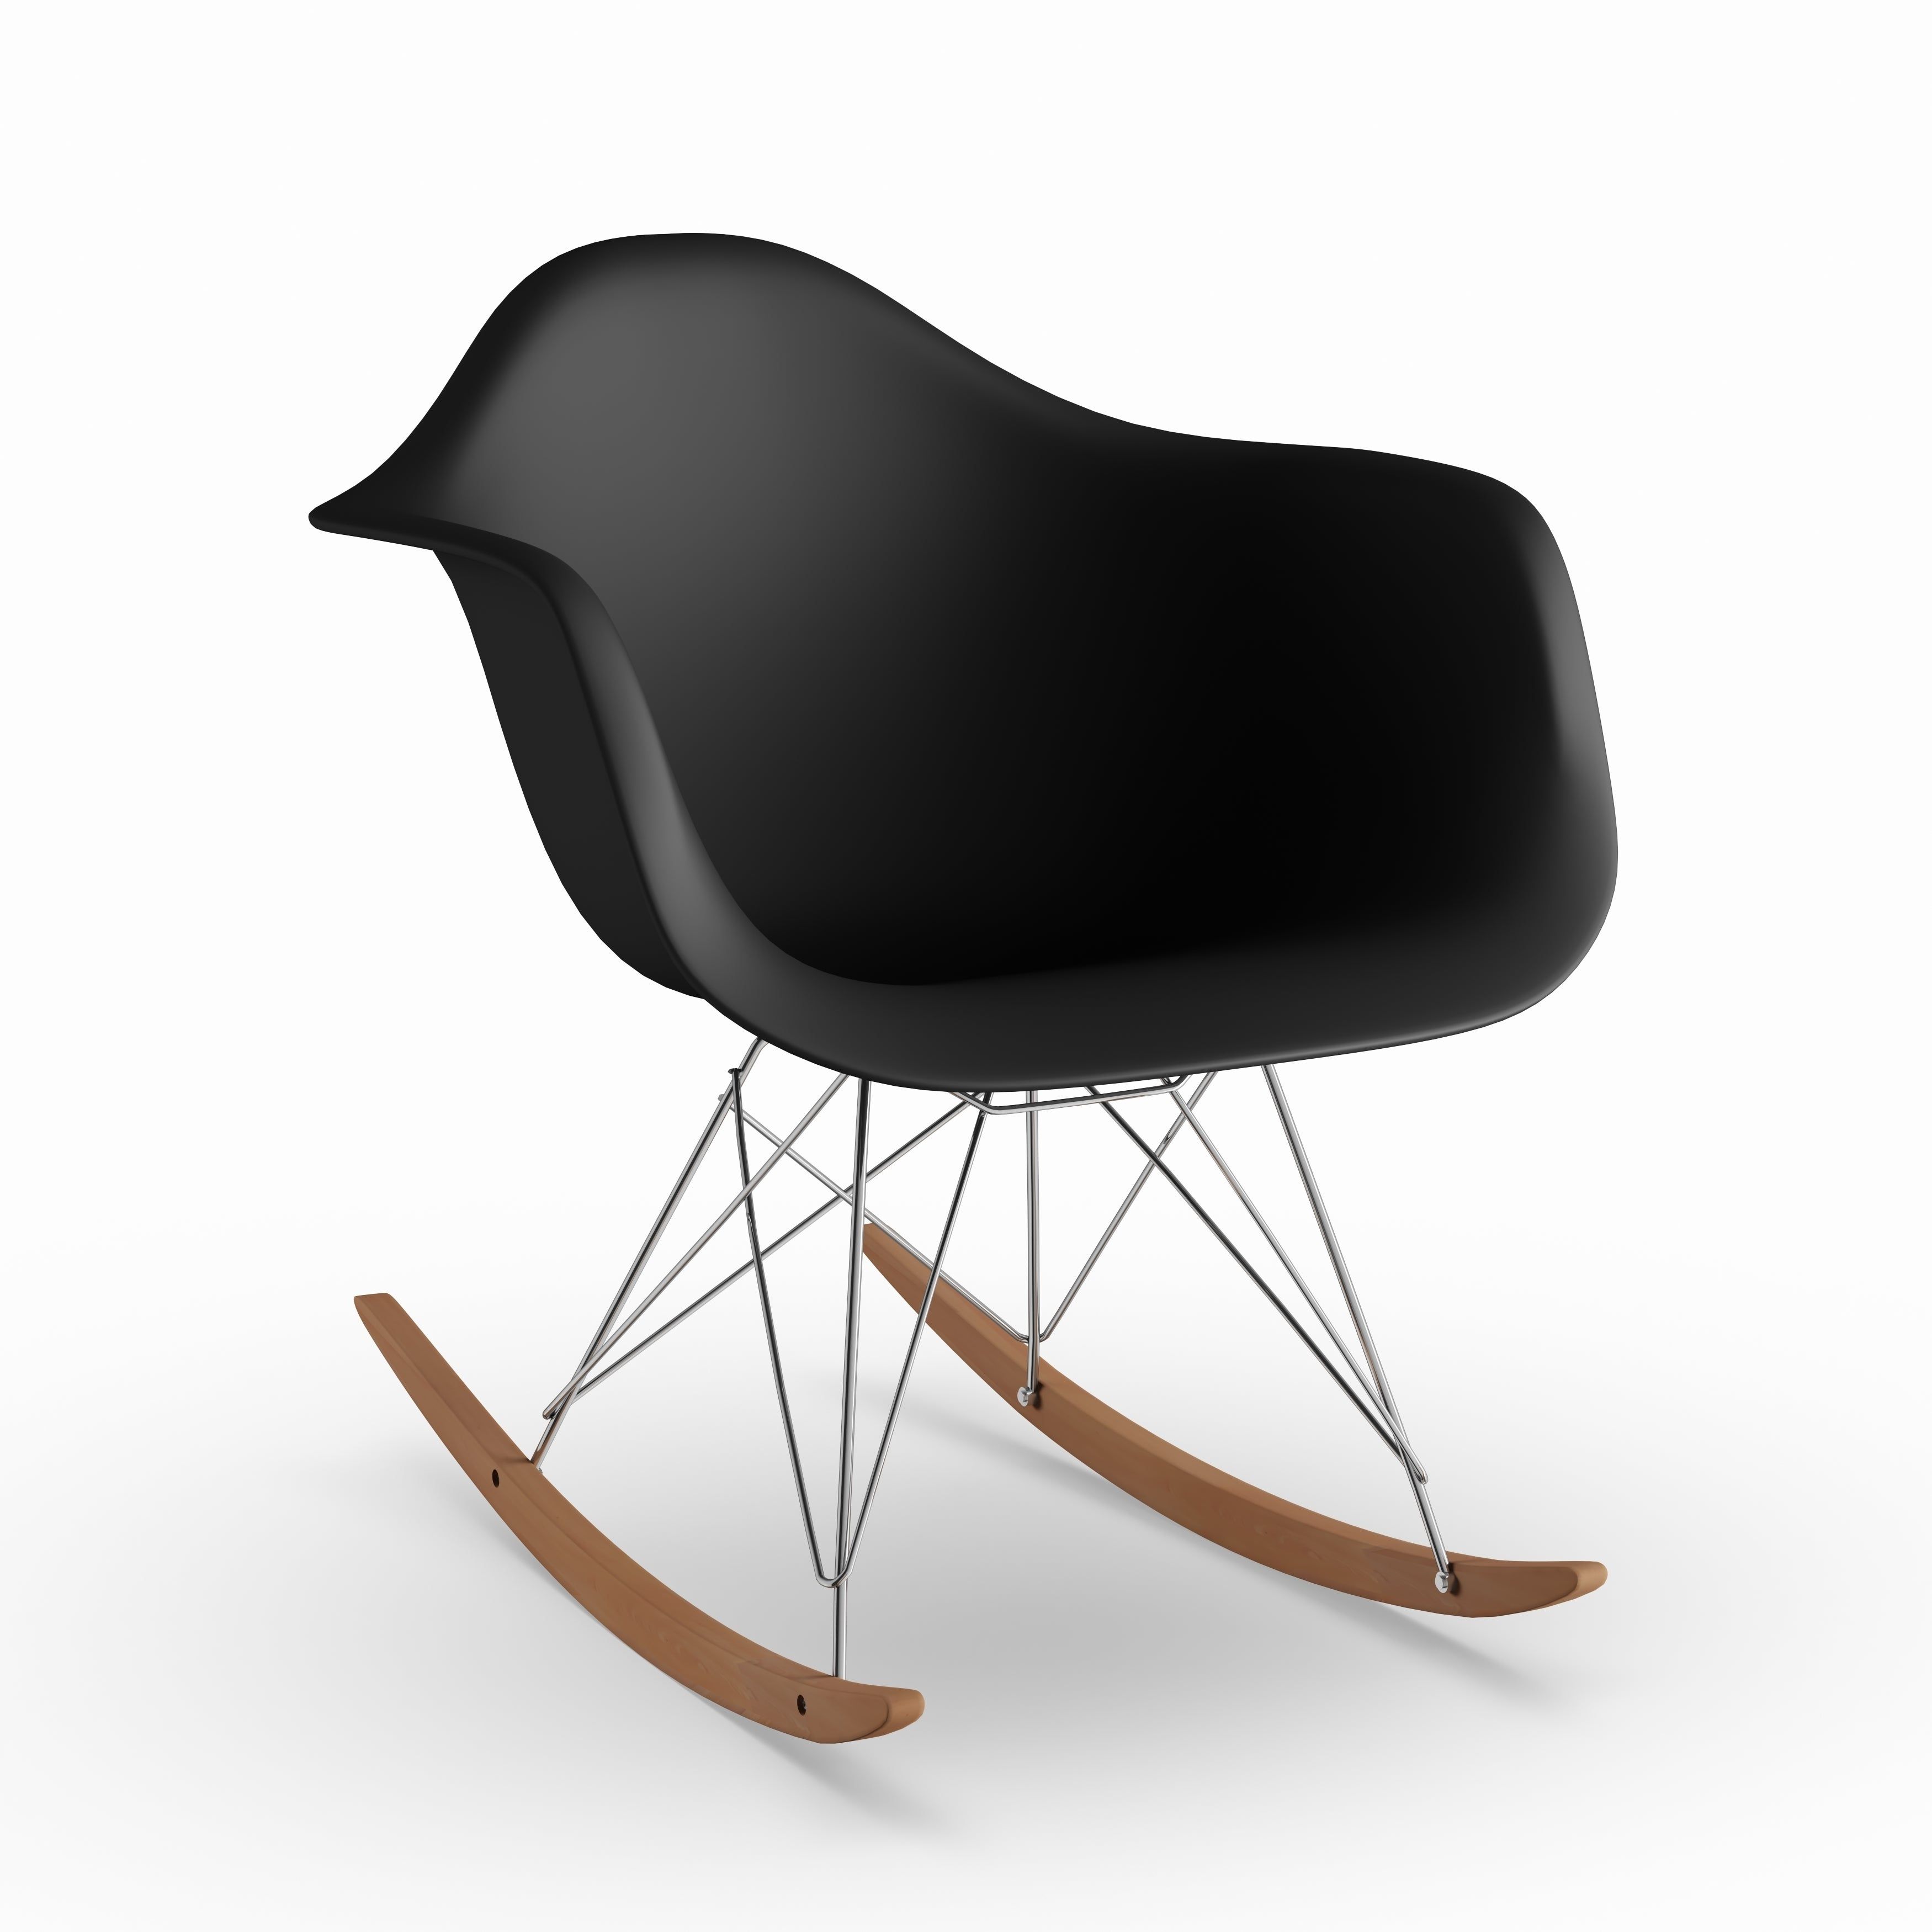 Carson Carrington Blixterboda Black Plastic Rocking Chair Regarding Black Plastic Rocking Chairs (View 14 of 20)